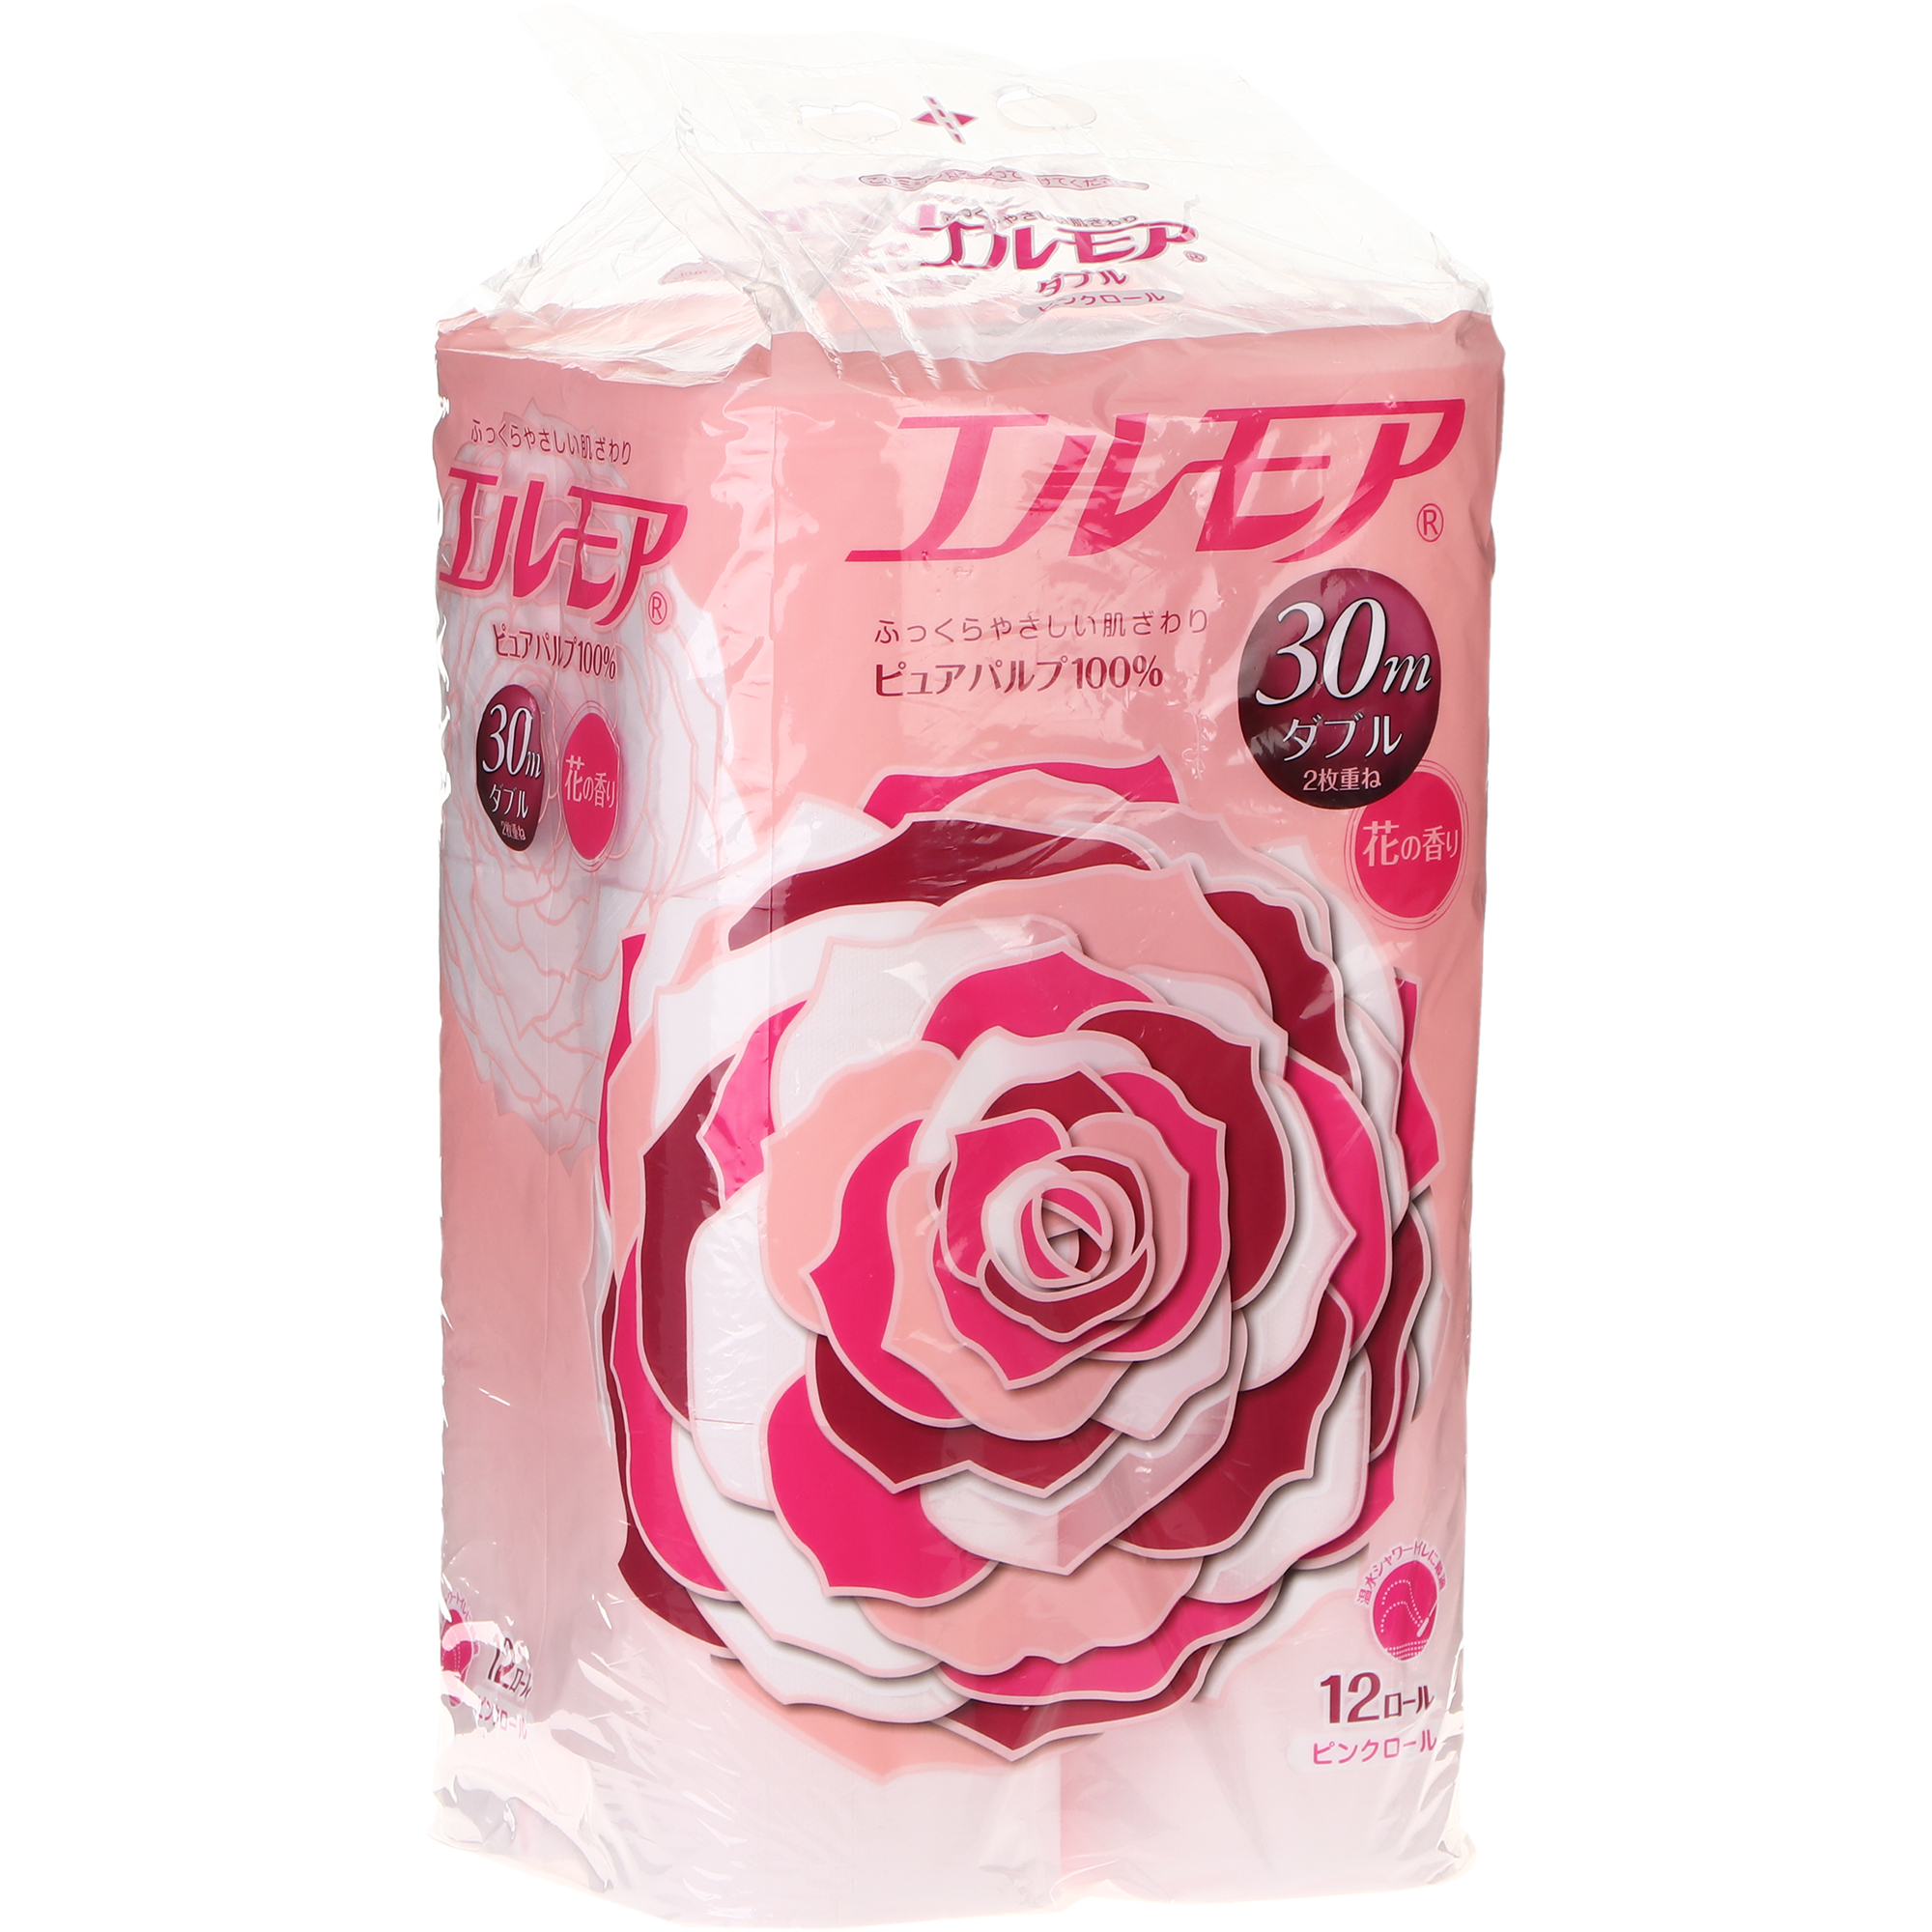 Бумага туалетная Ellemoi ароматическая двухслойная 30м розовая, цвет розовый - фото 1